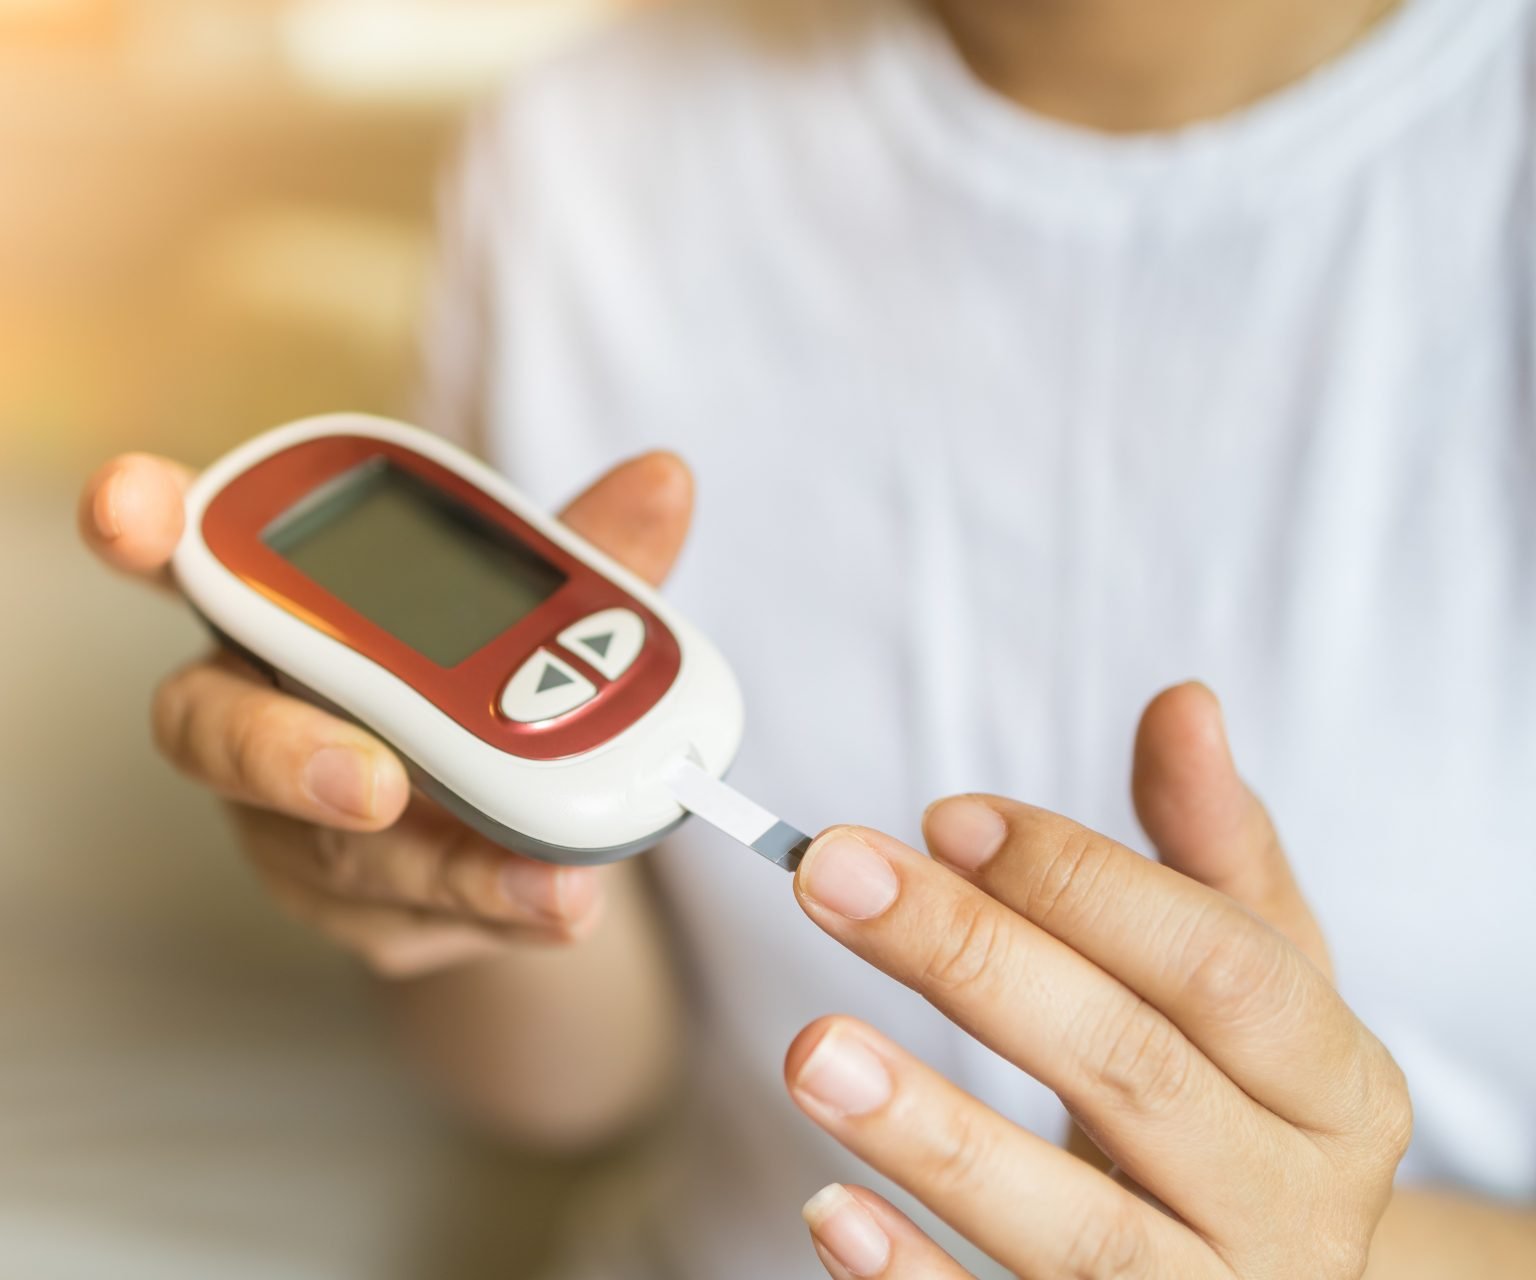 How Do I Measure My Blood Sugar?